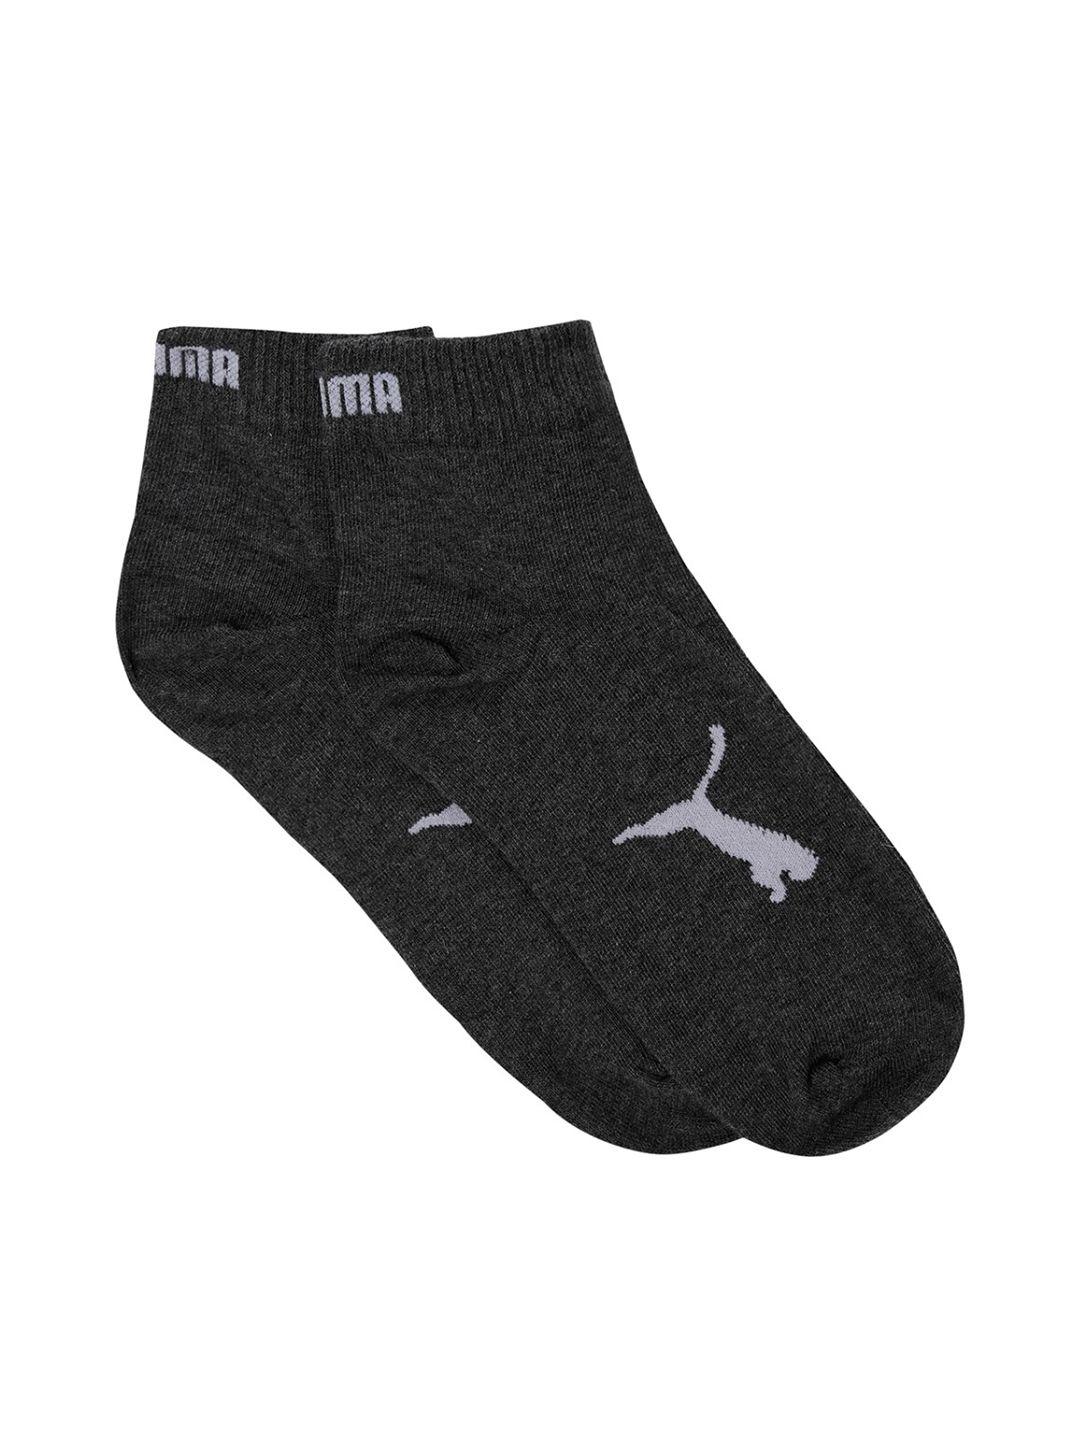 puma charcoal grey ankle-length socks